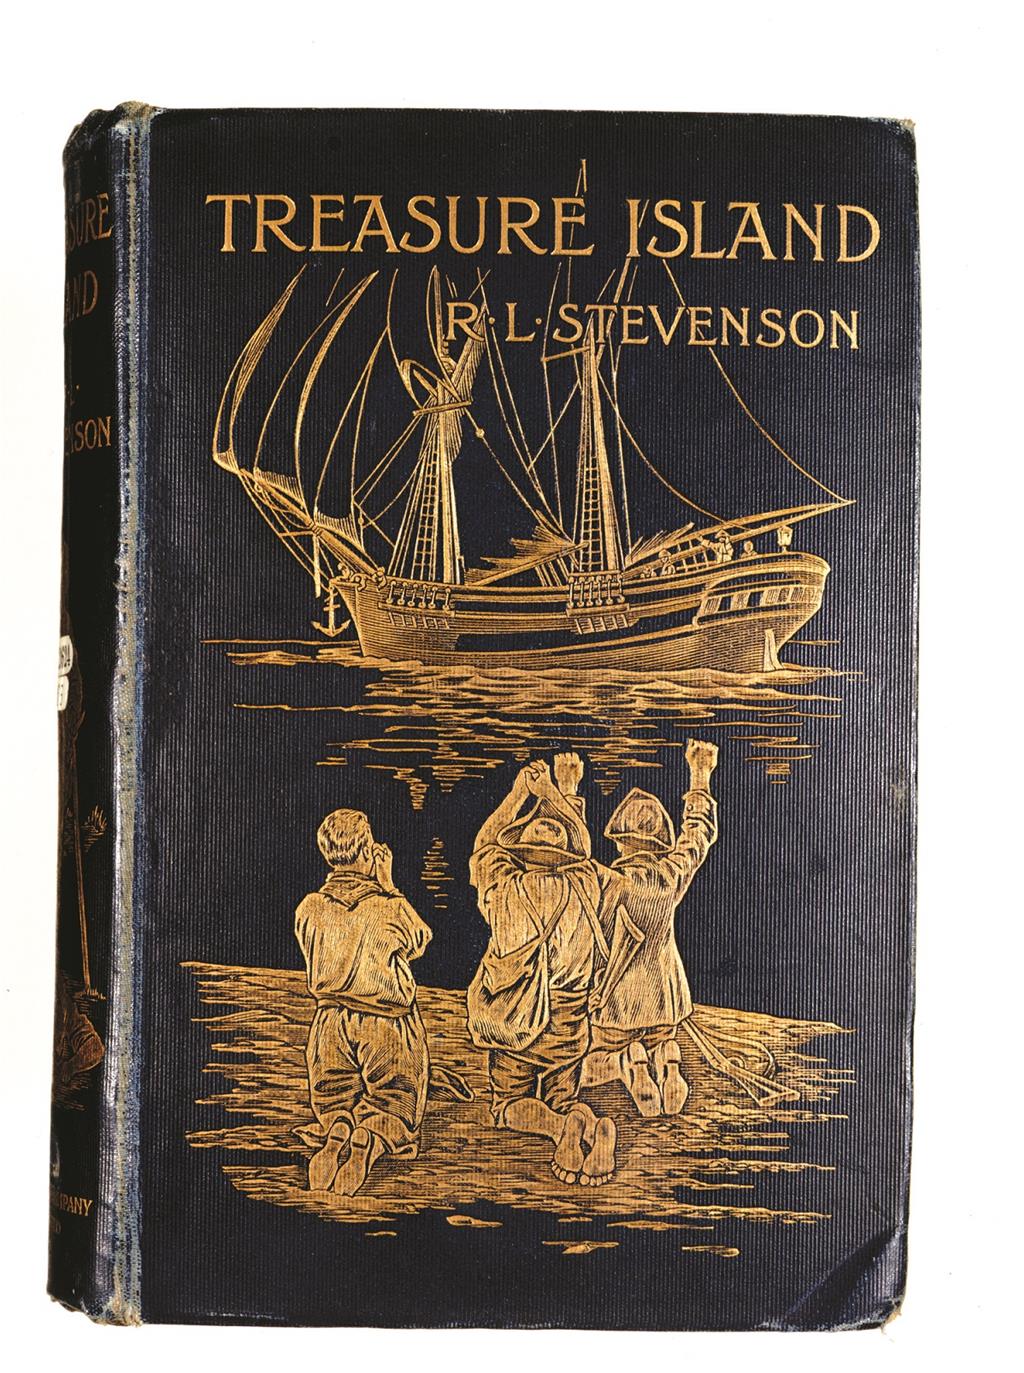 Treasure Island cover image